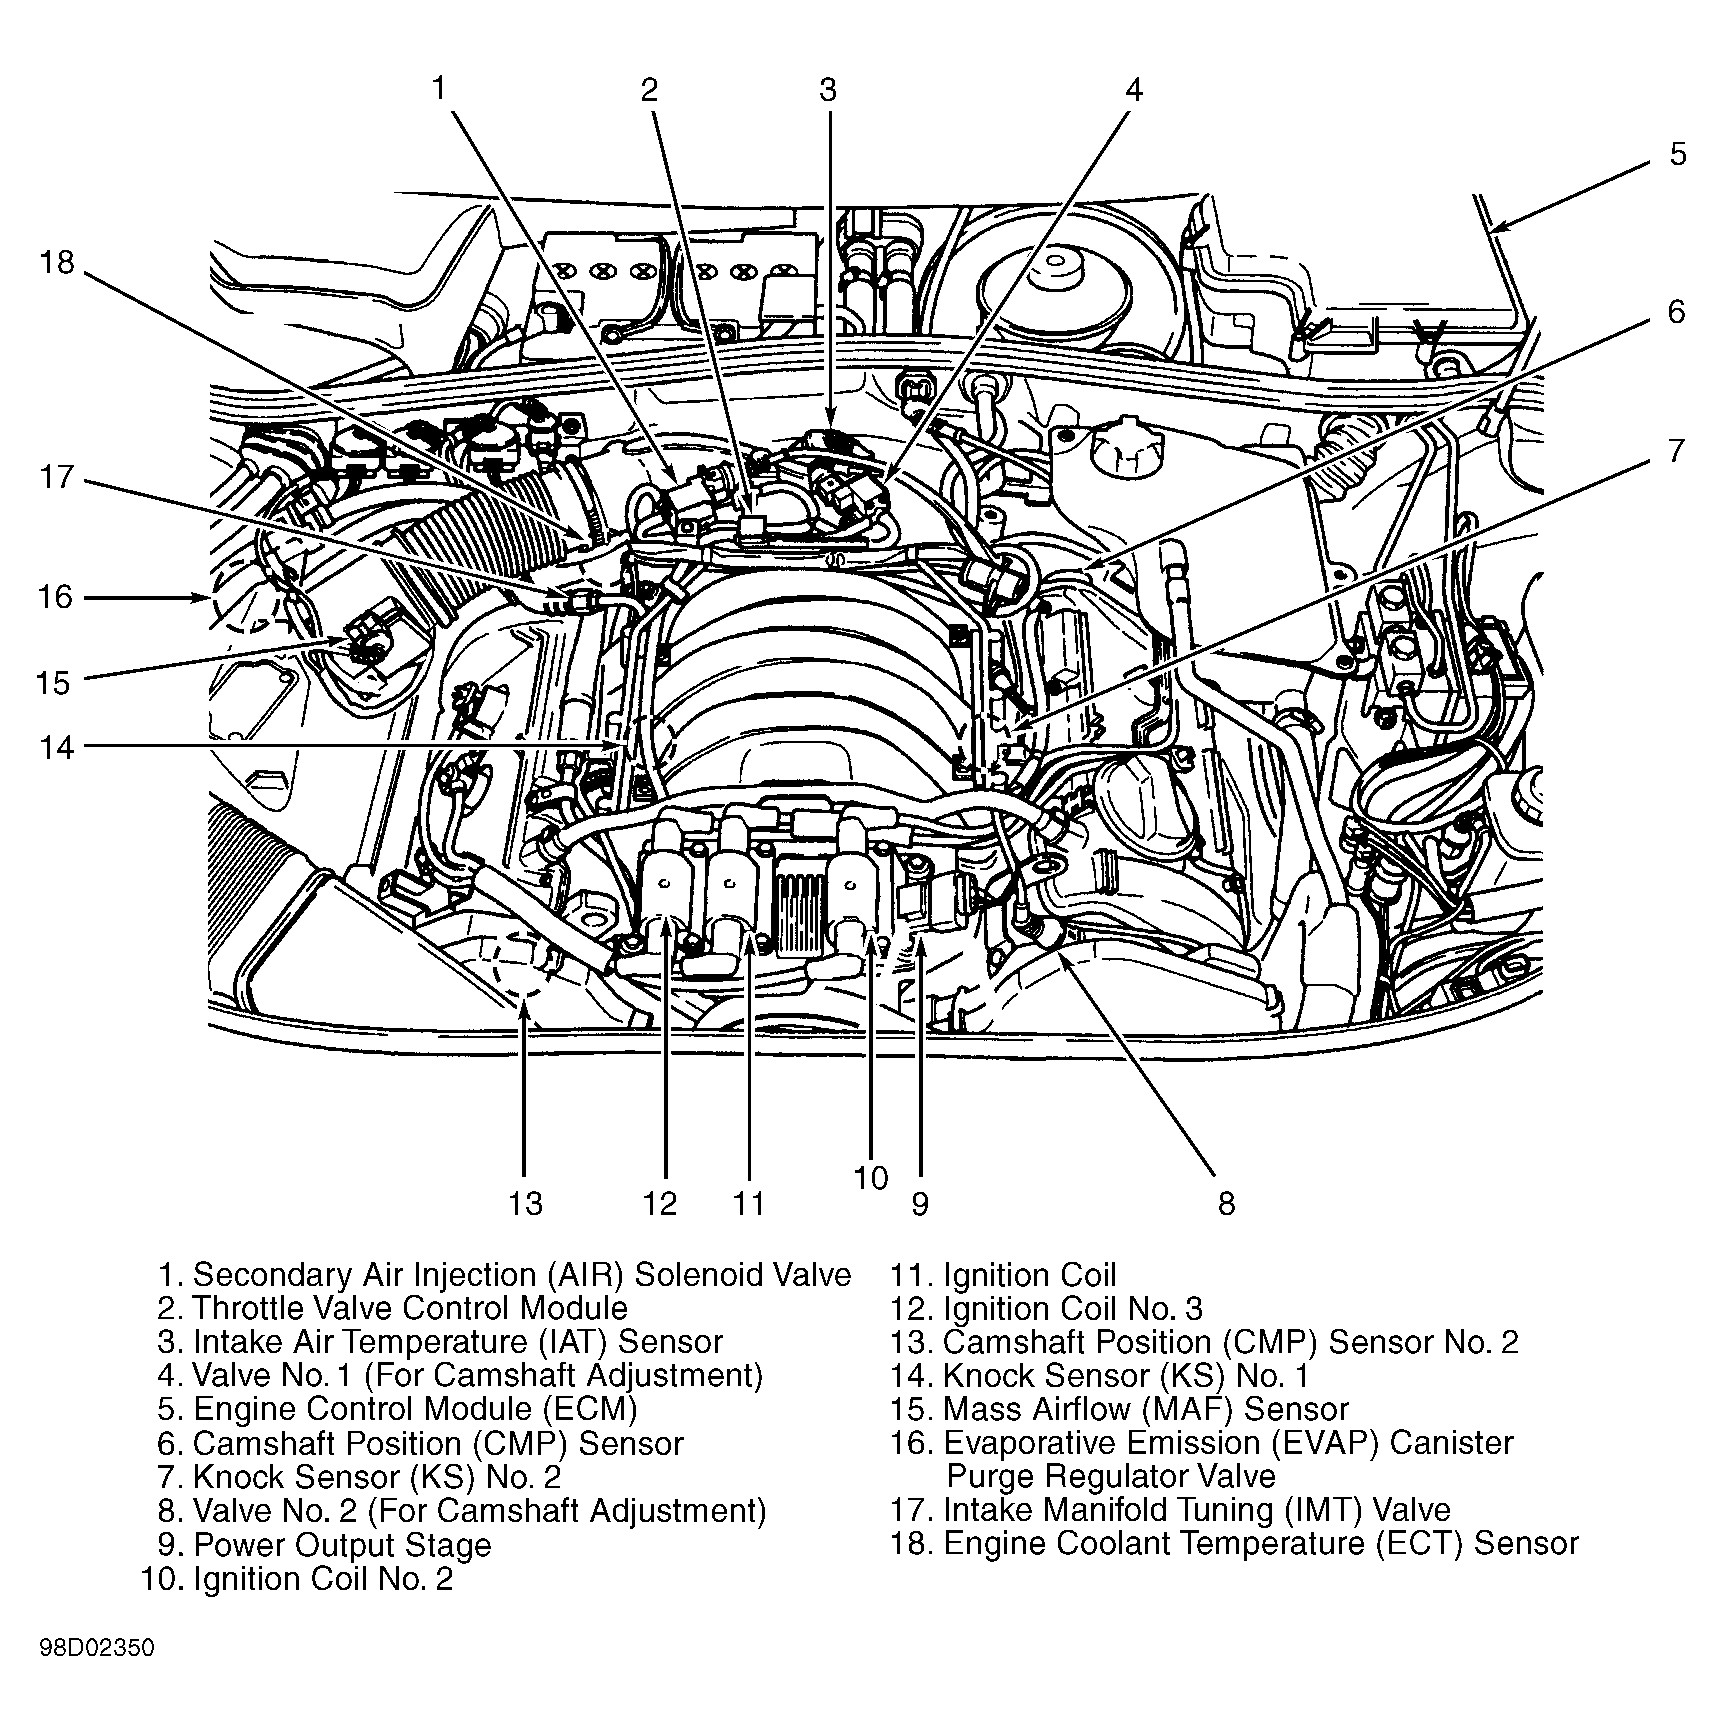 V6 Engine Diagram 2000 Audi A6 Engine Diagram Audi Wiring Diagrams Instructions Of V6 Engine Diagram